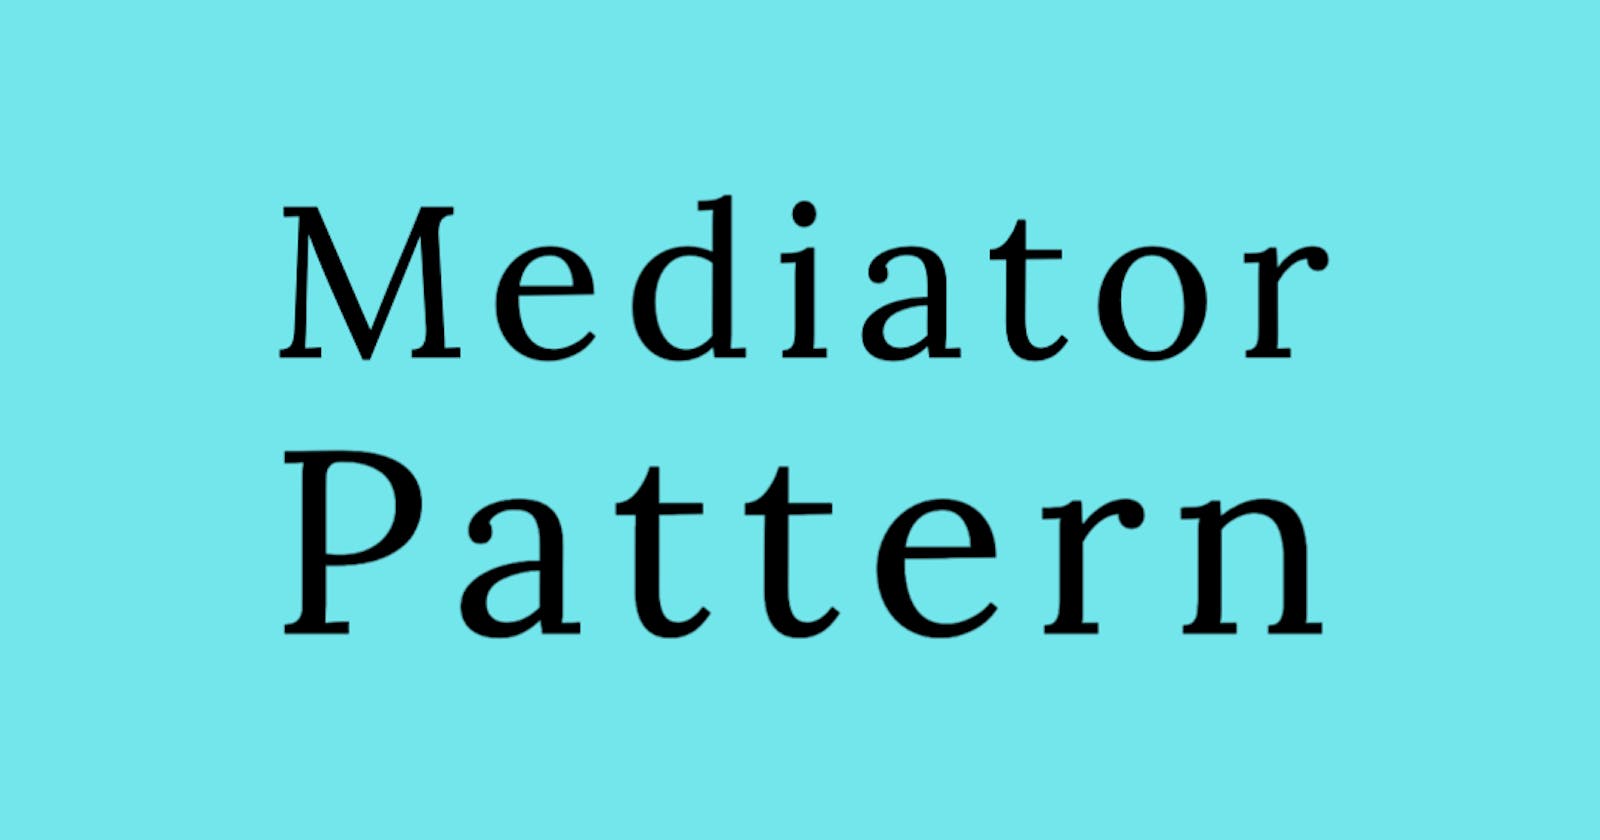 Notes: Go Design Patterns - Mediator Pattern